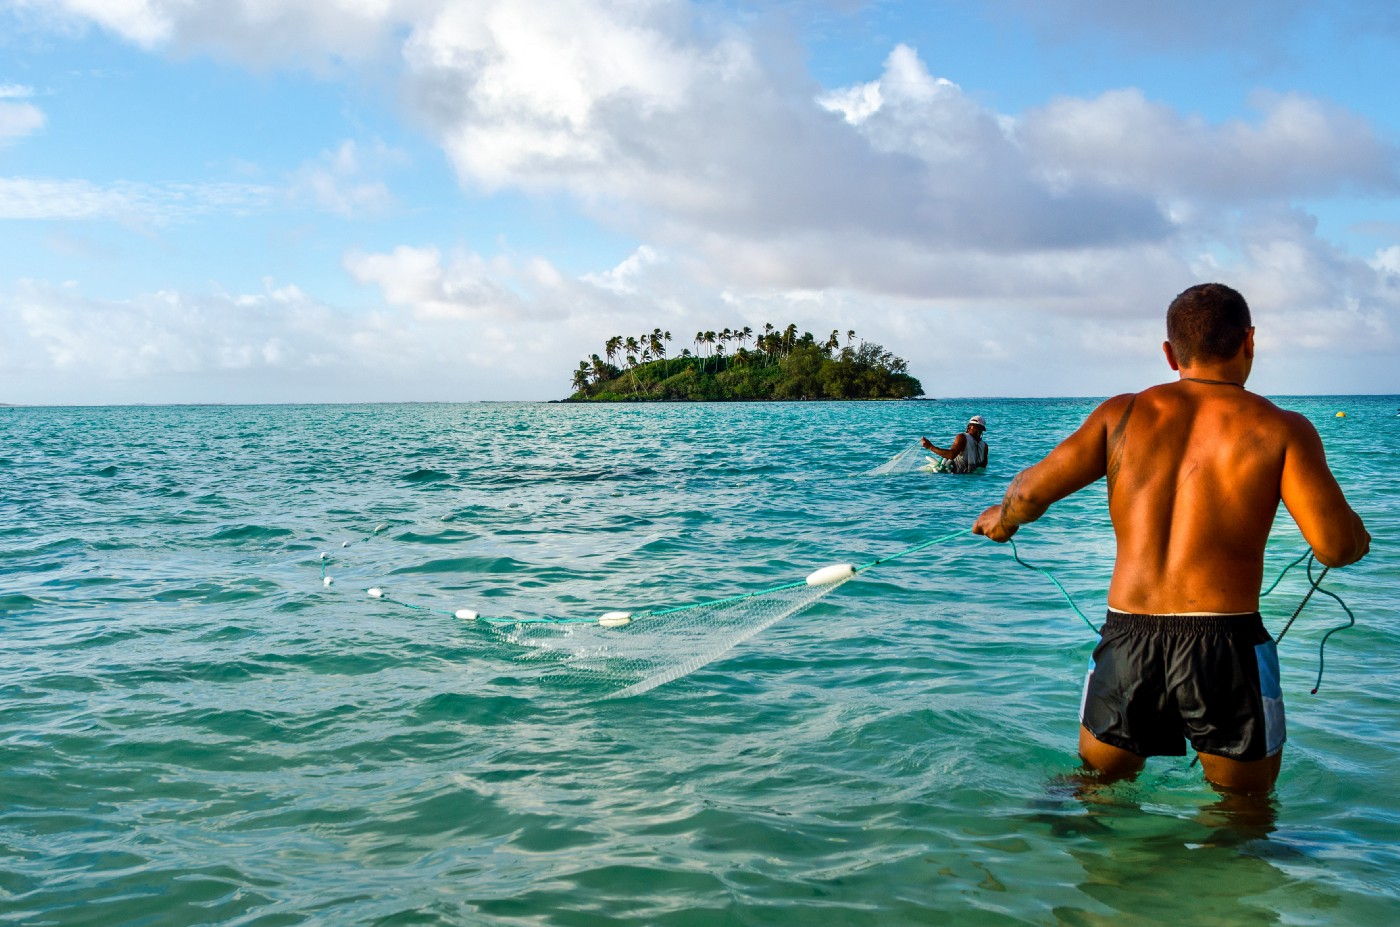 Cook islanders fishing in the ocean during summer time